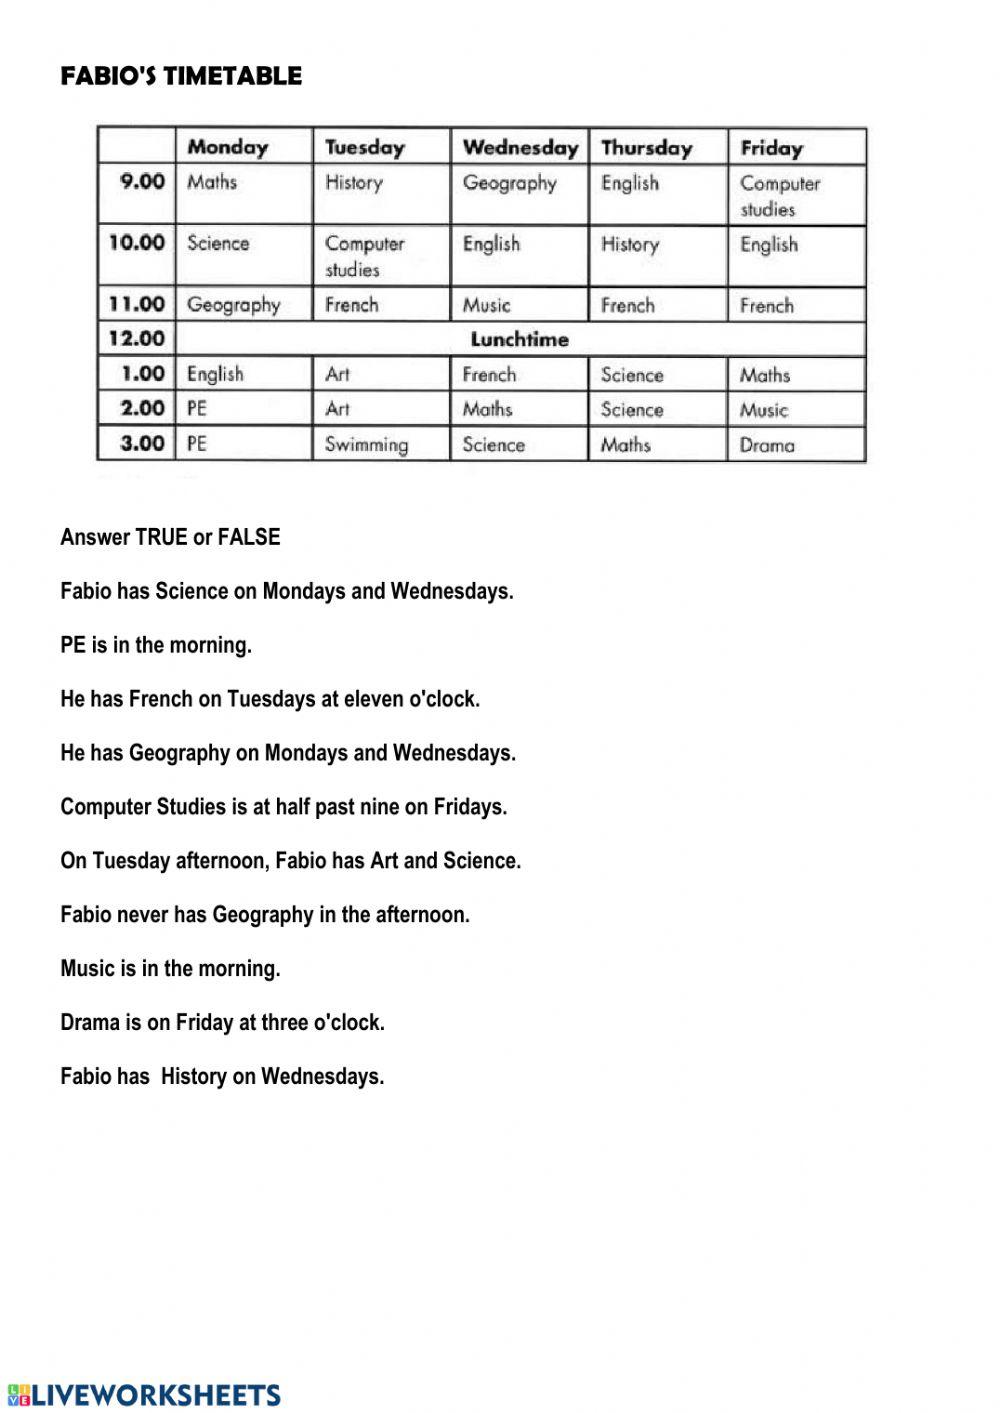 Fabio's Timetable